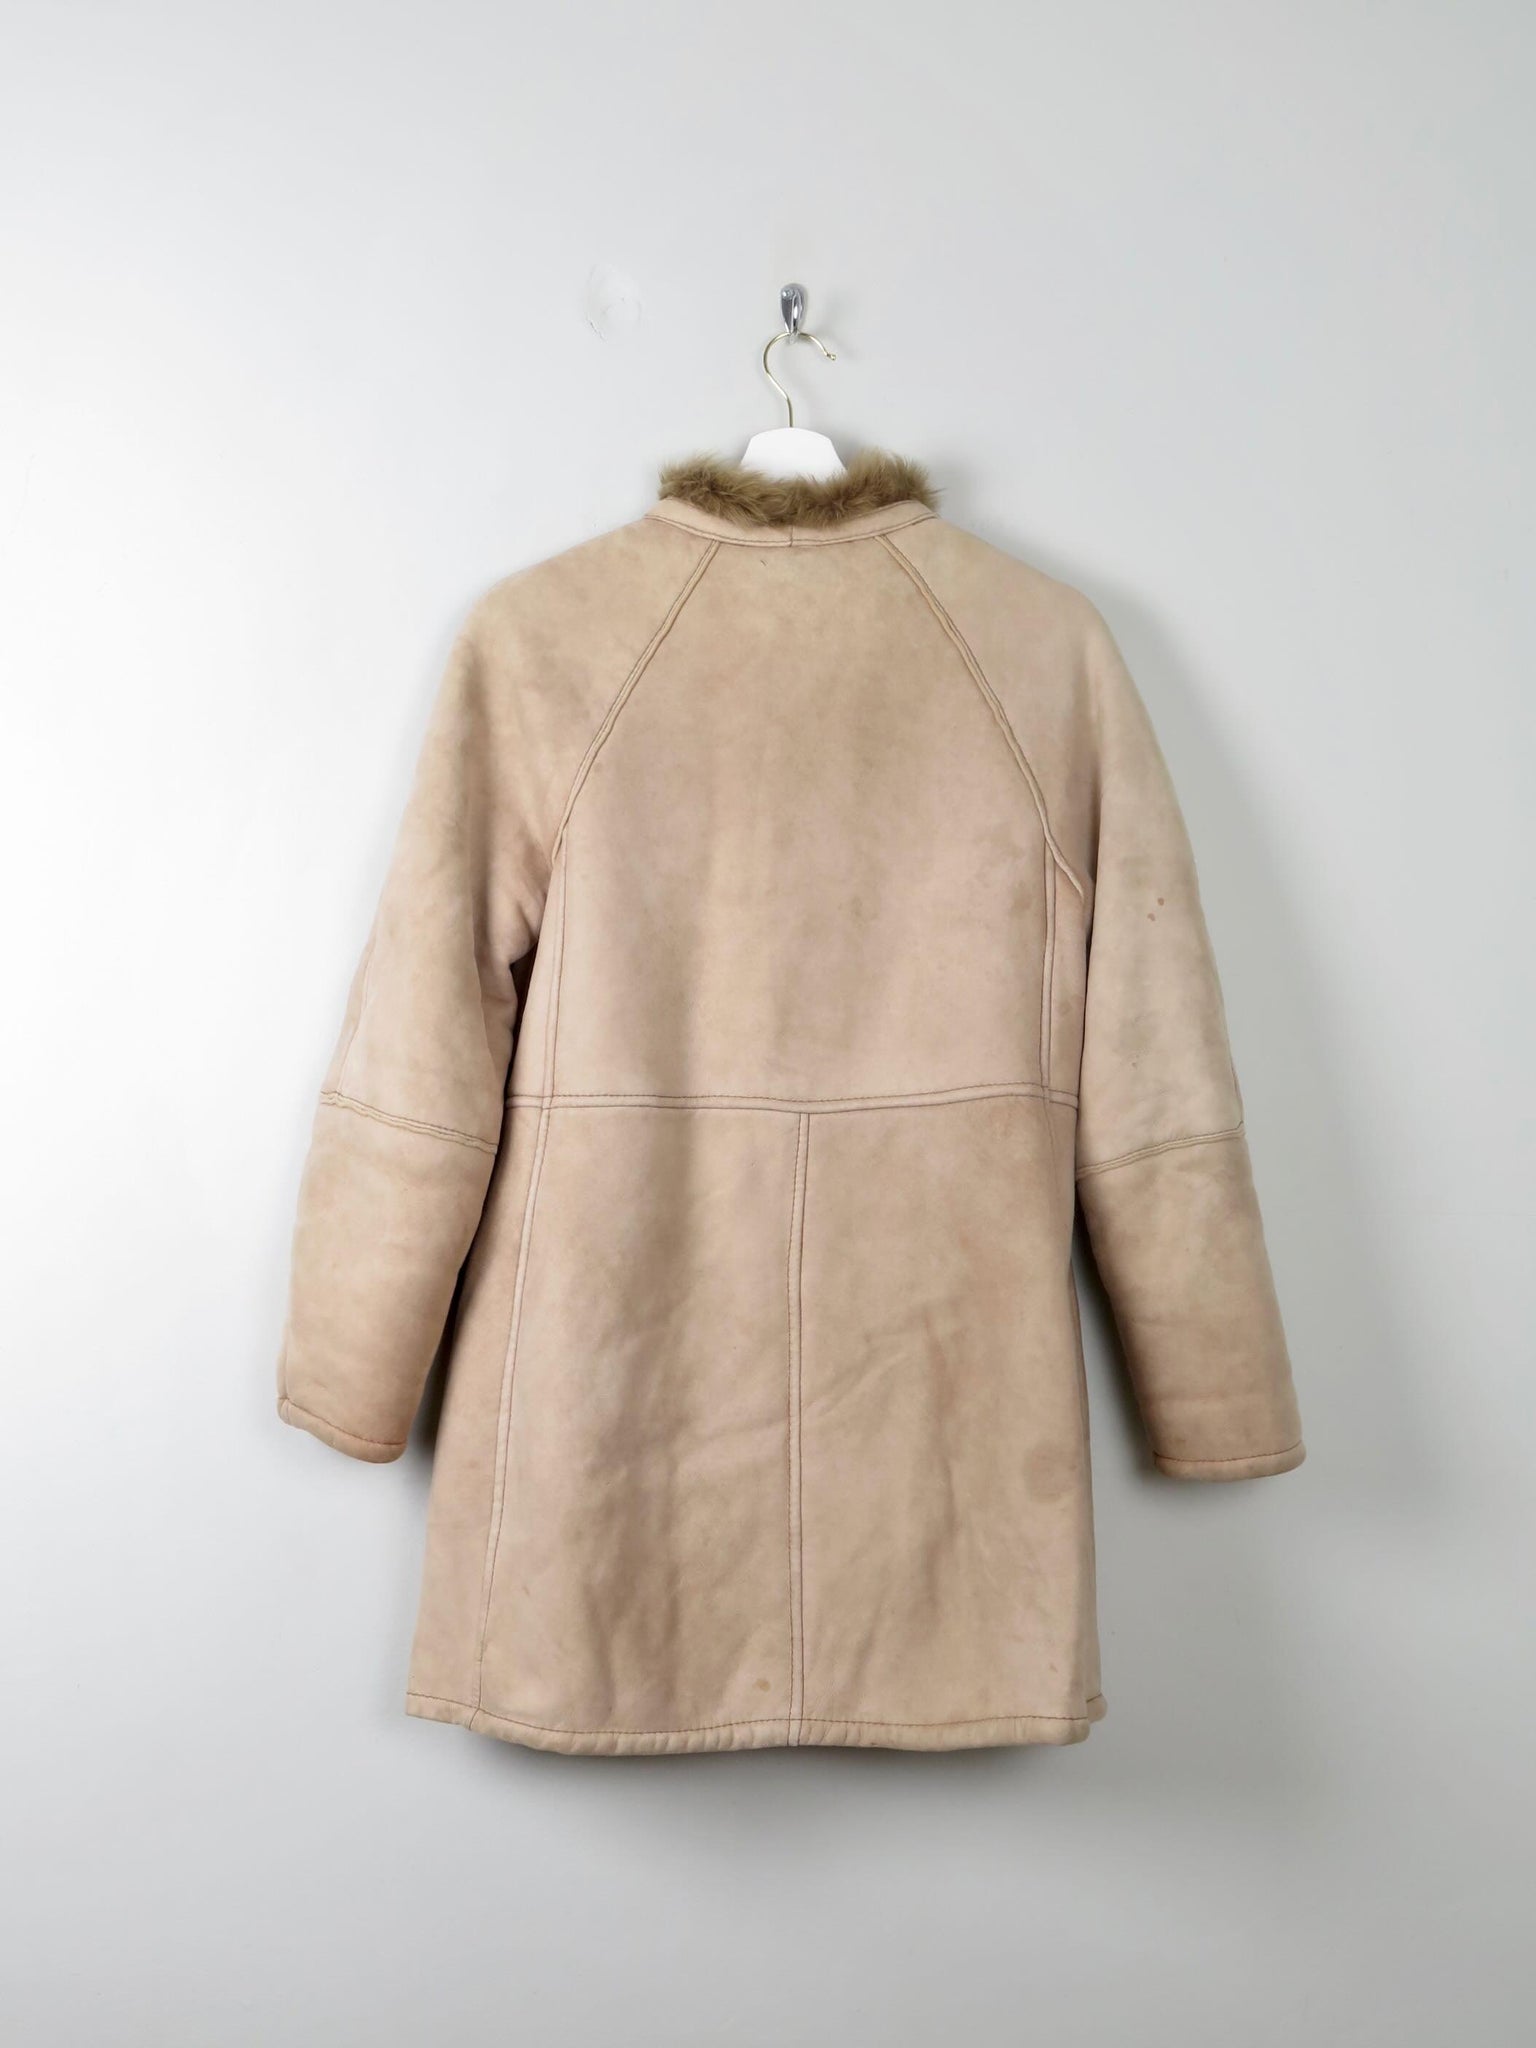 Women's Vintage Taupe Sheepskin Jacket S - The Harlequin